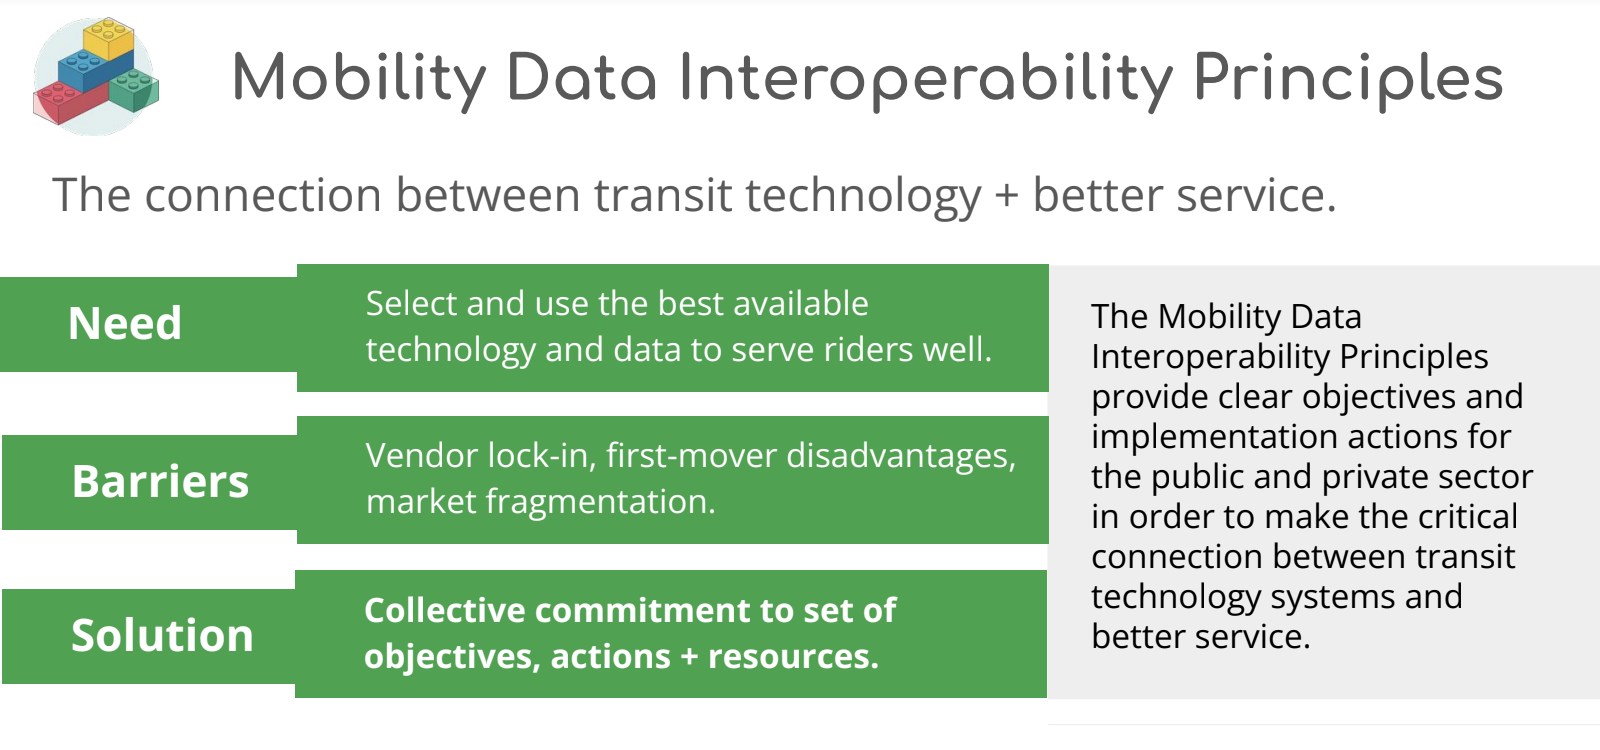 Mobility Data Interoperability Principles overview diagram